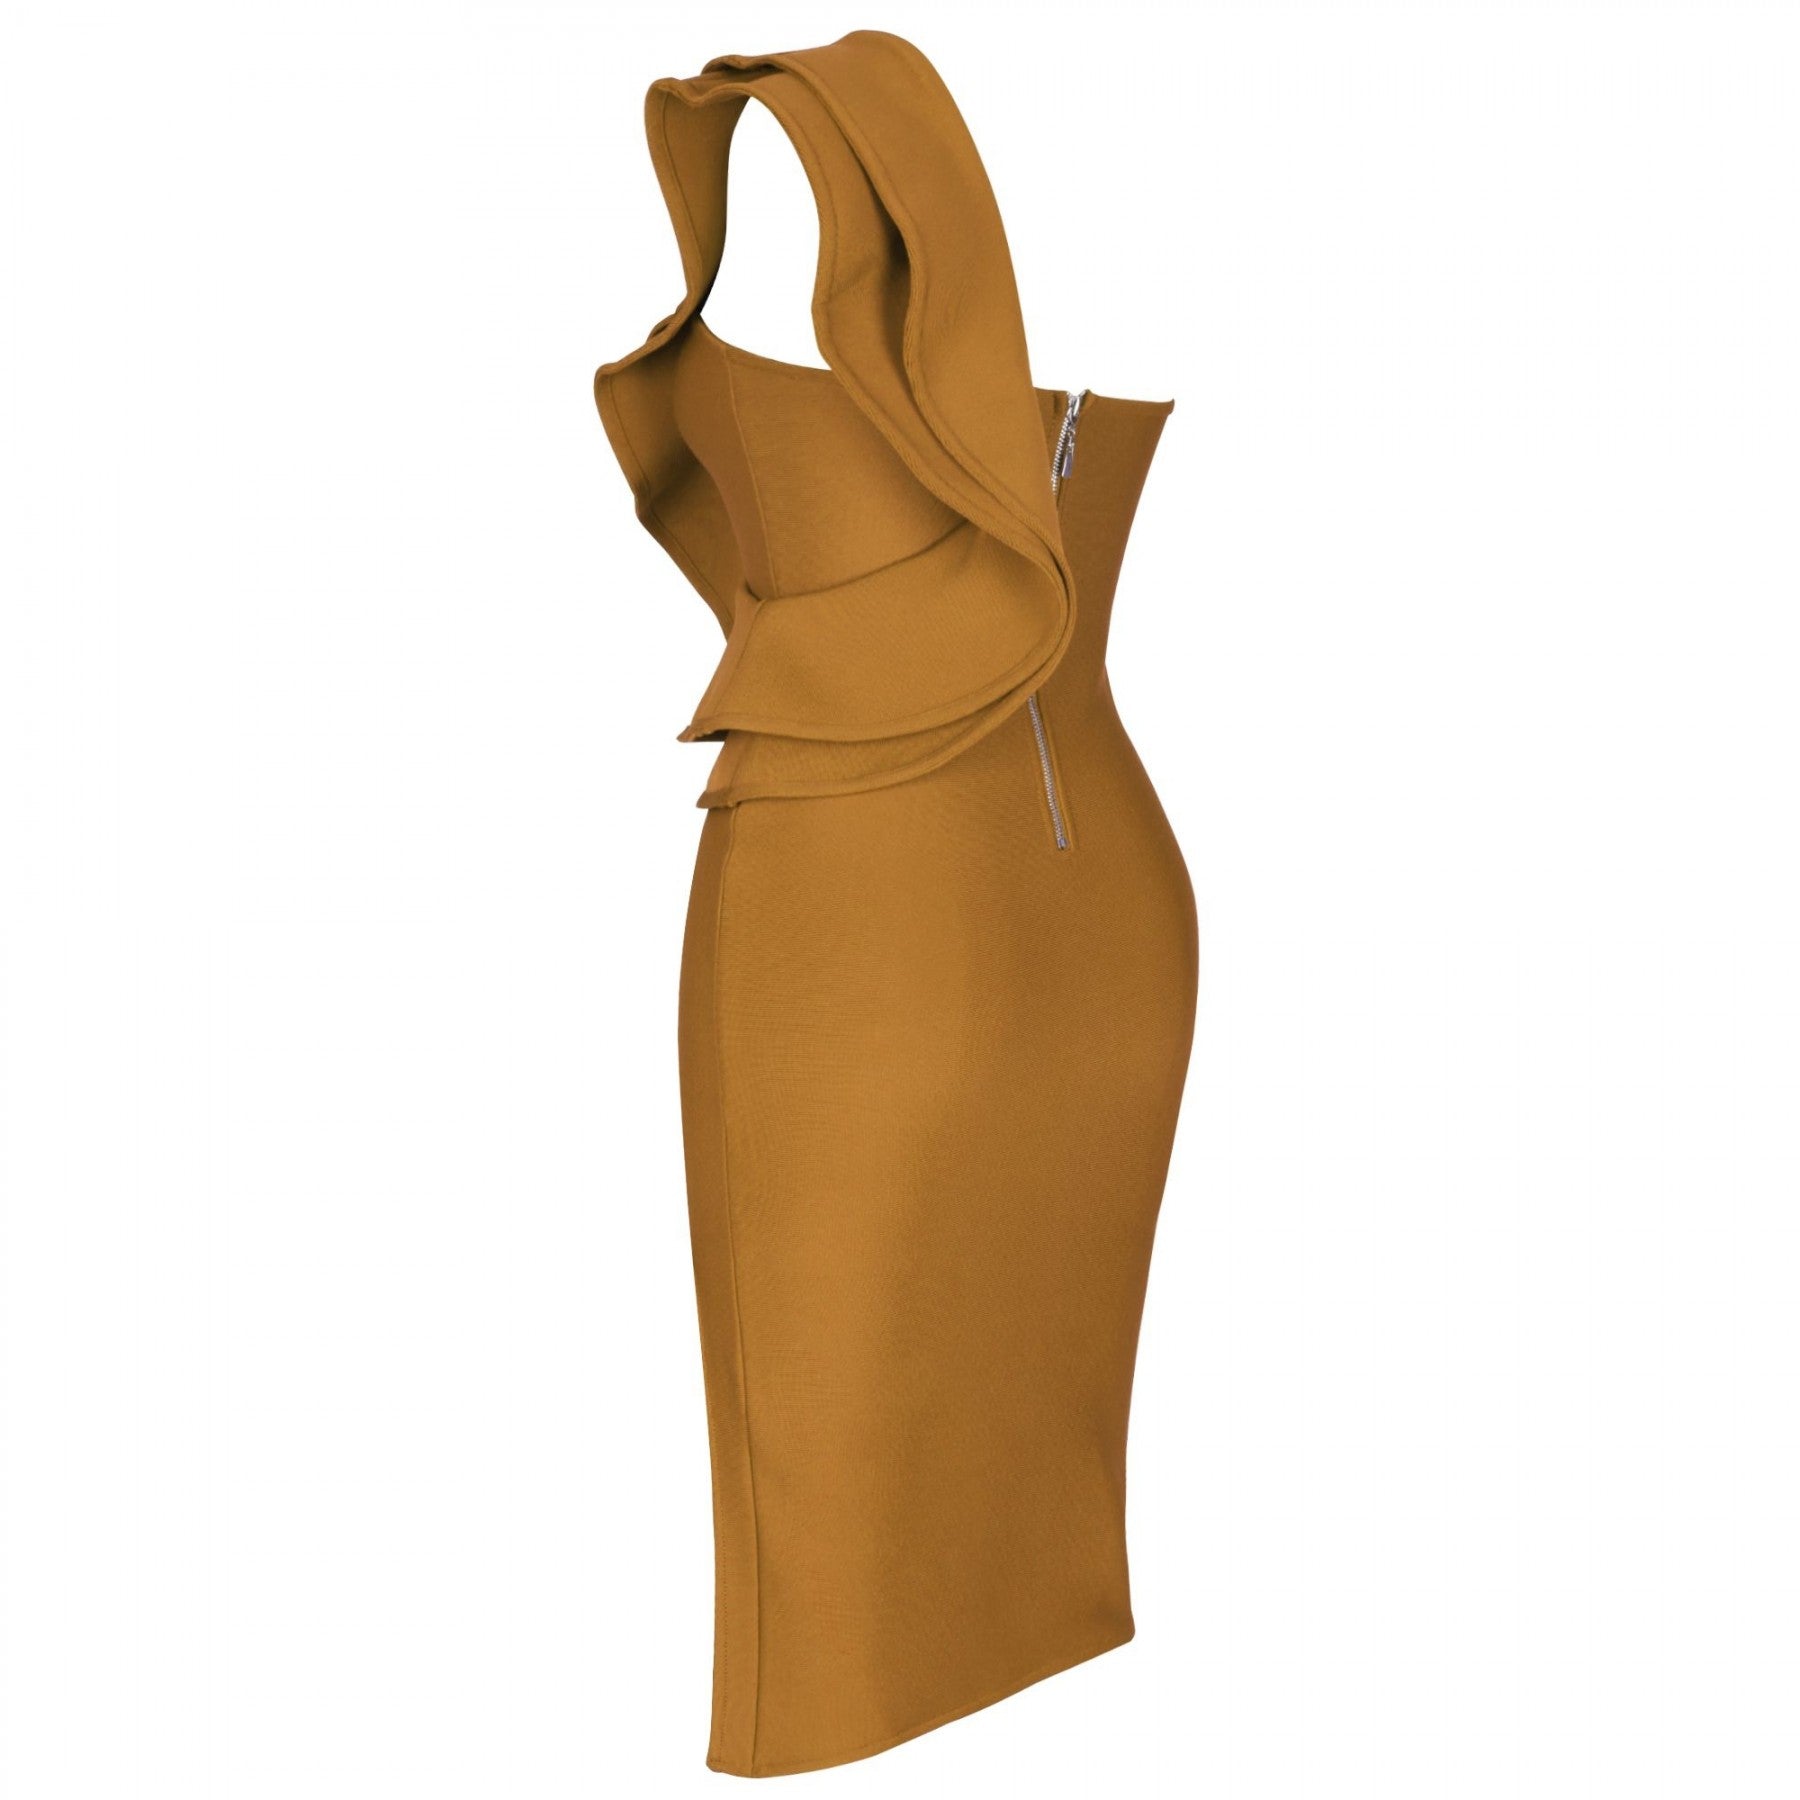 One Shoulder Sleeveless Frill Over Knee Bandage Dress PM1205 31 in wolddress